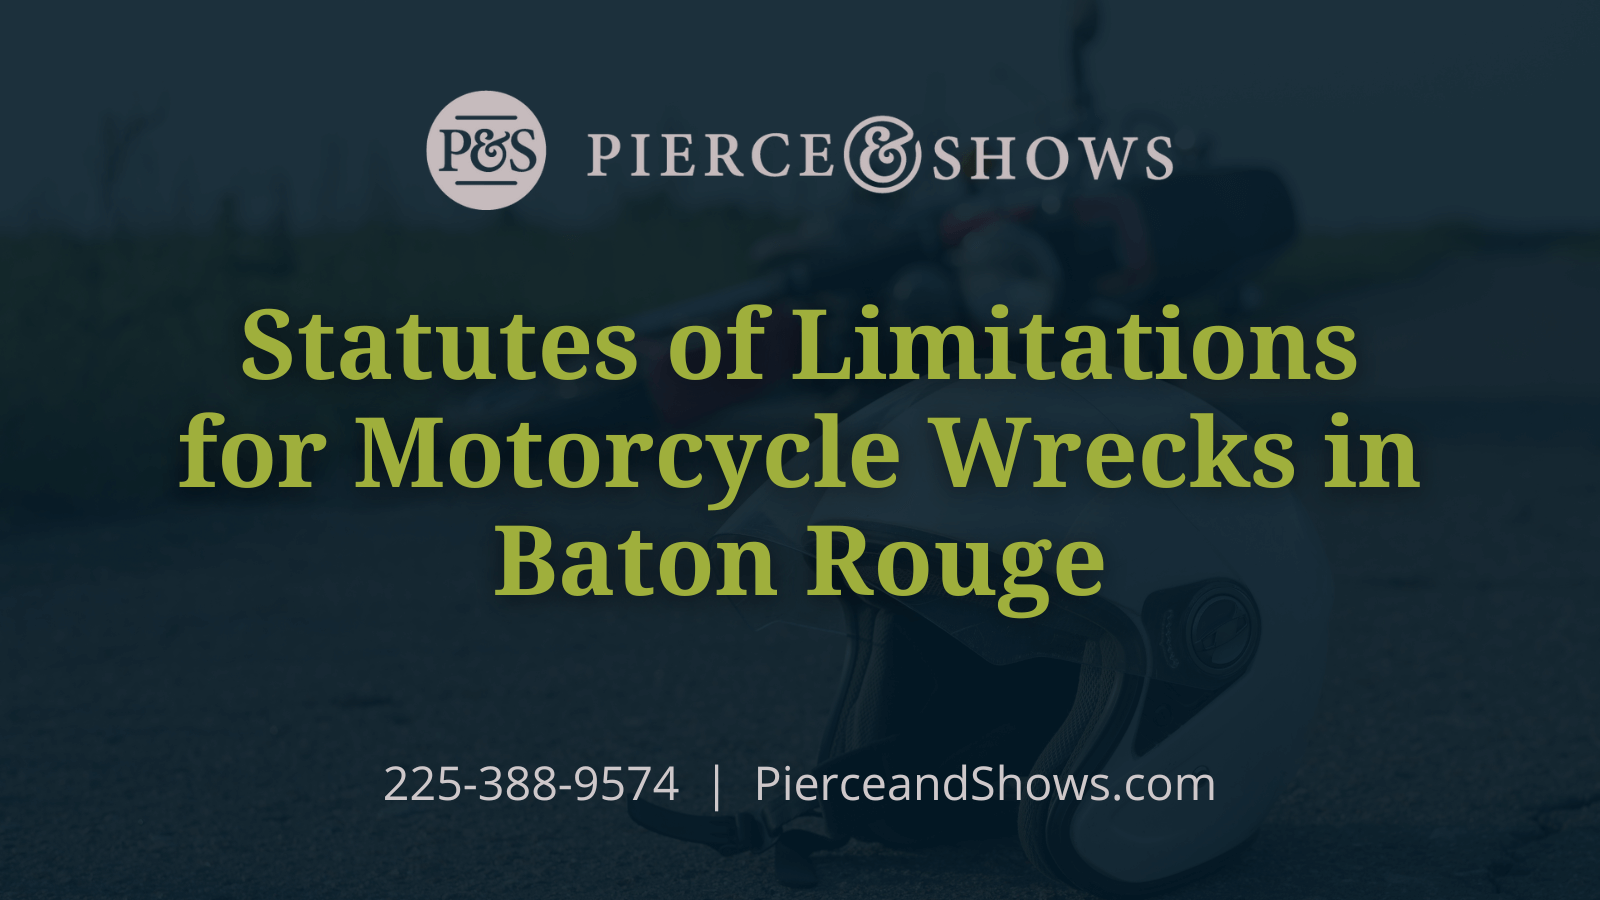 Statutes of Limitations for Motorcycle Wrecks in Baton Rouge - Baton Rouge Louisiana injury attorney Pierce & Shows